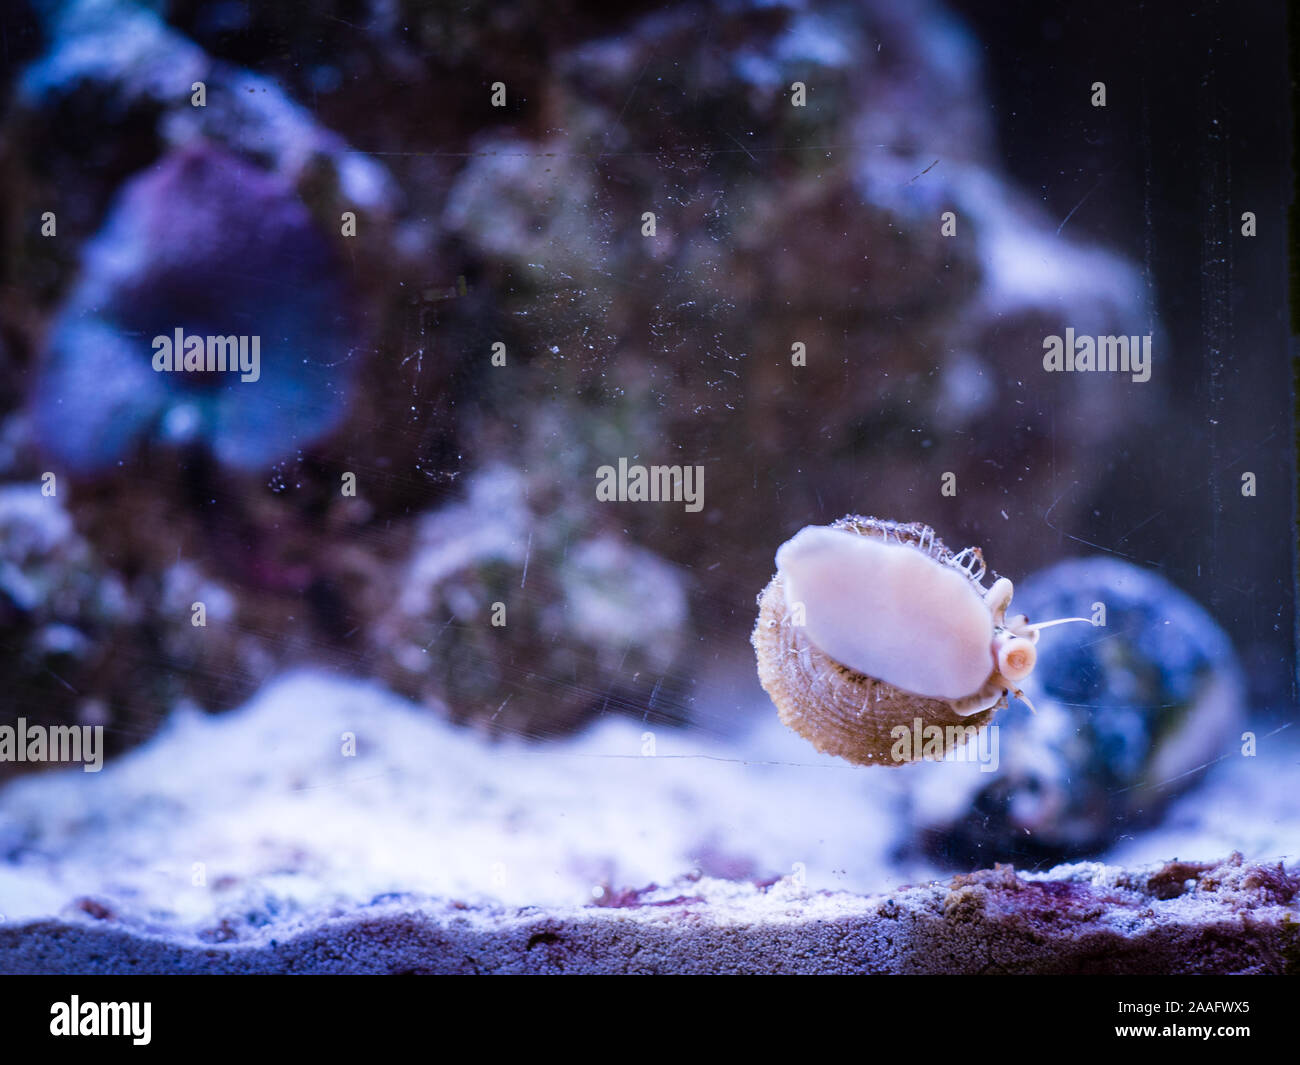 trochus snail eating algae on the glass of an reef aquarium Stock Photo